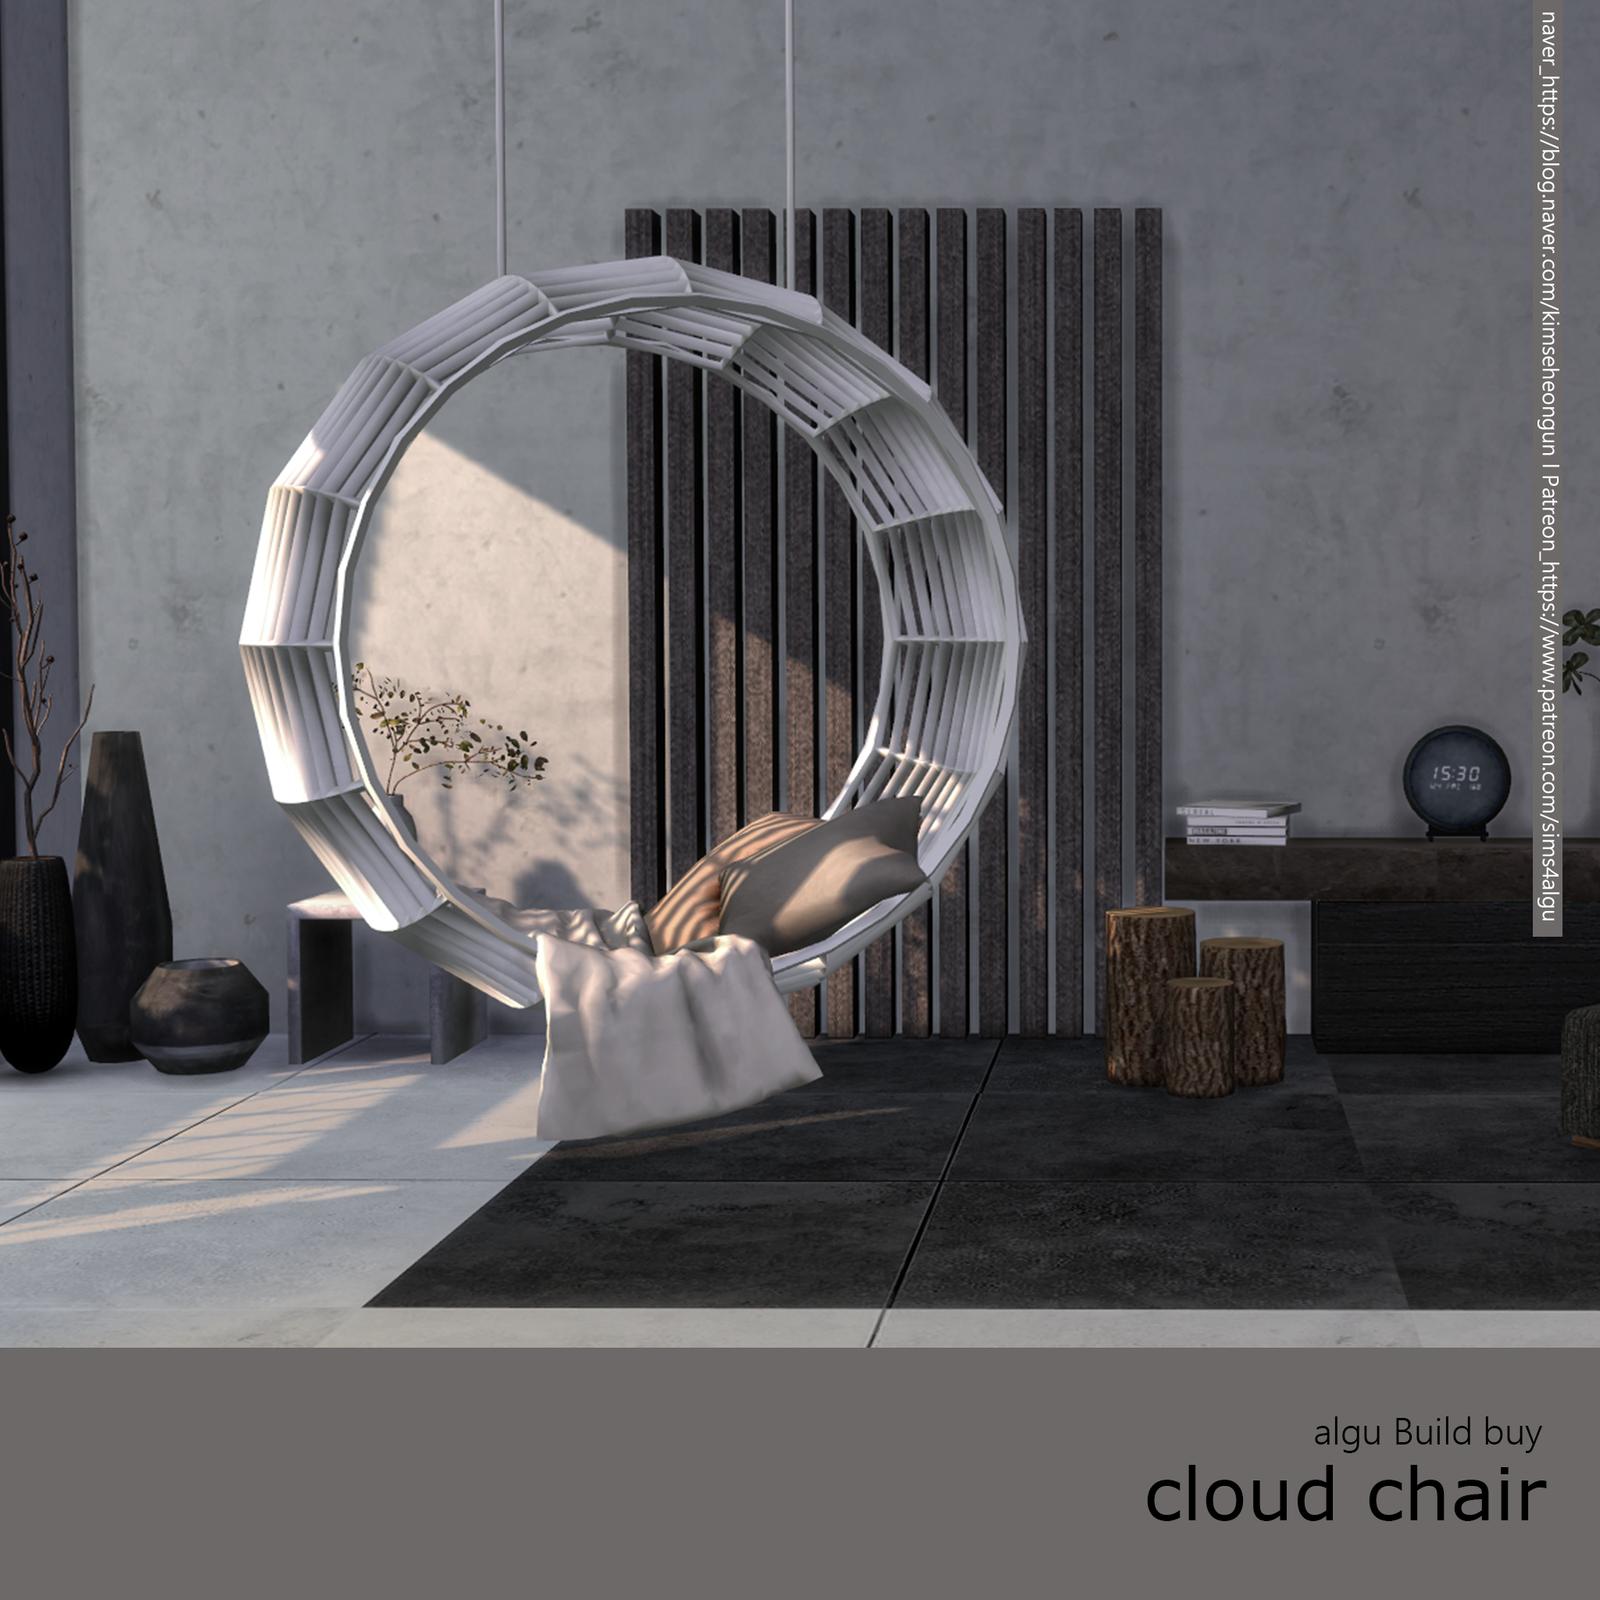 981 algu cloud chair algu